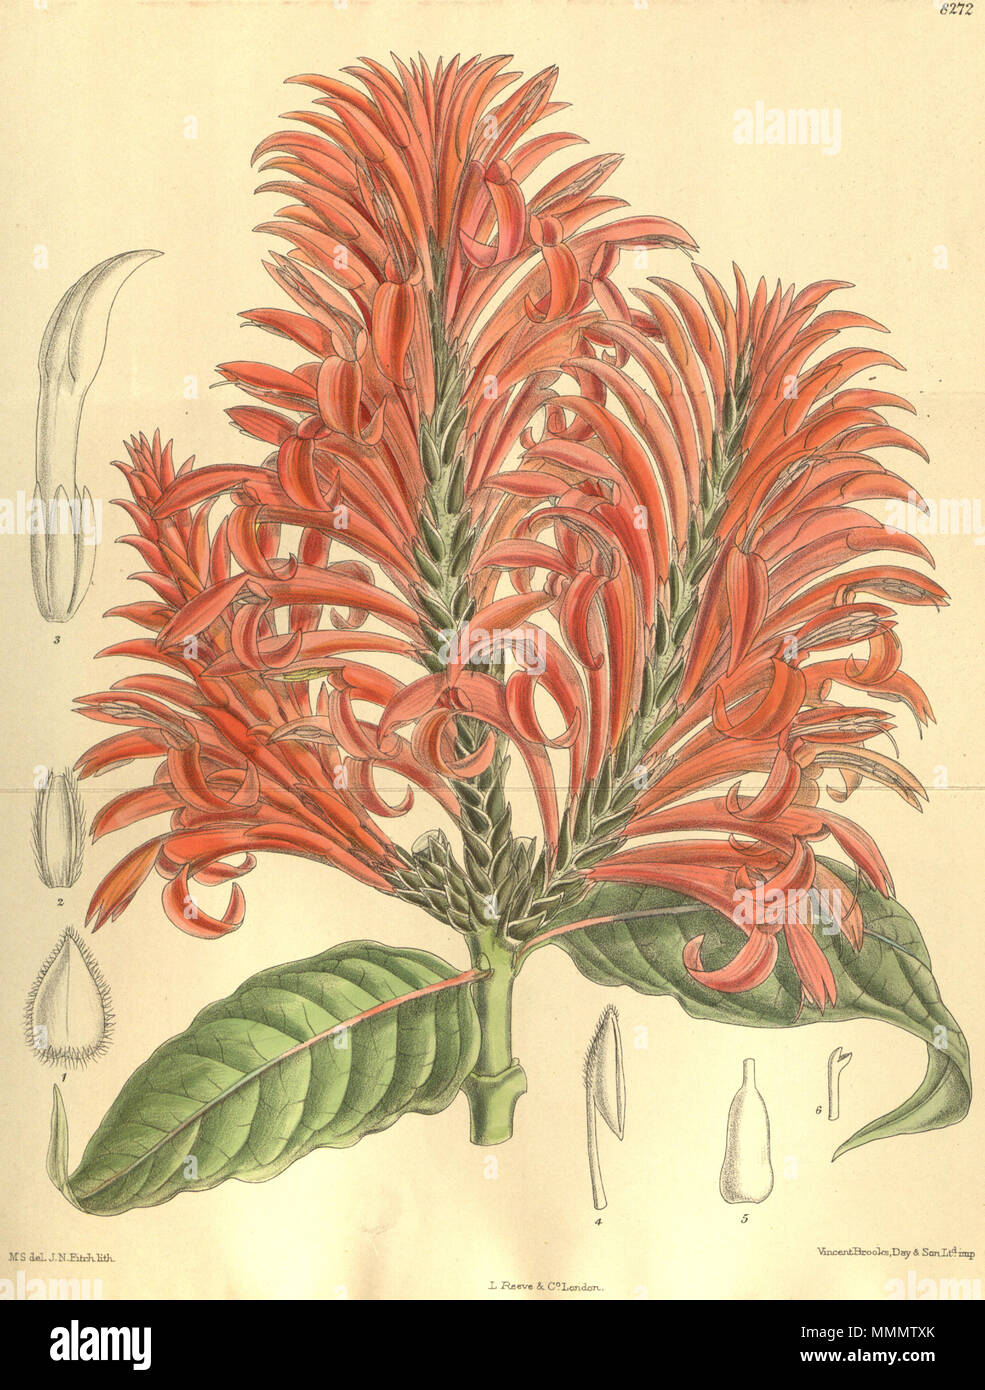 . Aphelandra tetragona, Acanthaceae  . 1909. M.S. del., J.N.Fitch lith. 52 Aphelandra tetragona 135-8272 Stock Photo